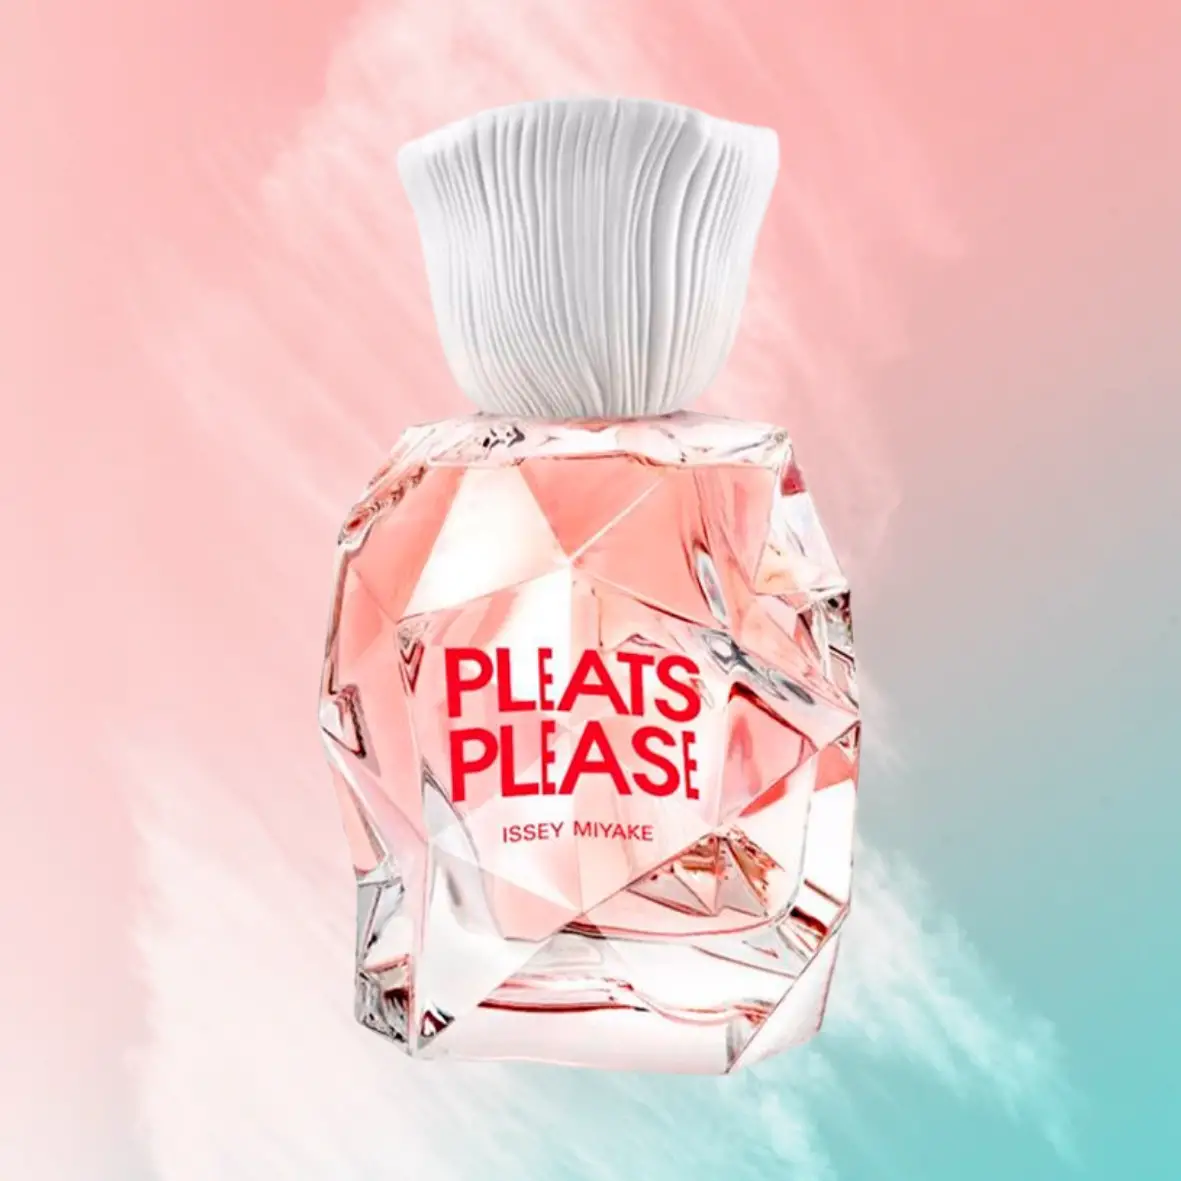 Issey Miyake Pleats Please
Best Sweet Pea Blossom Perfumes